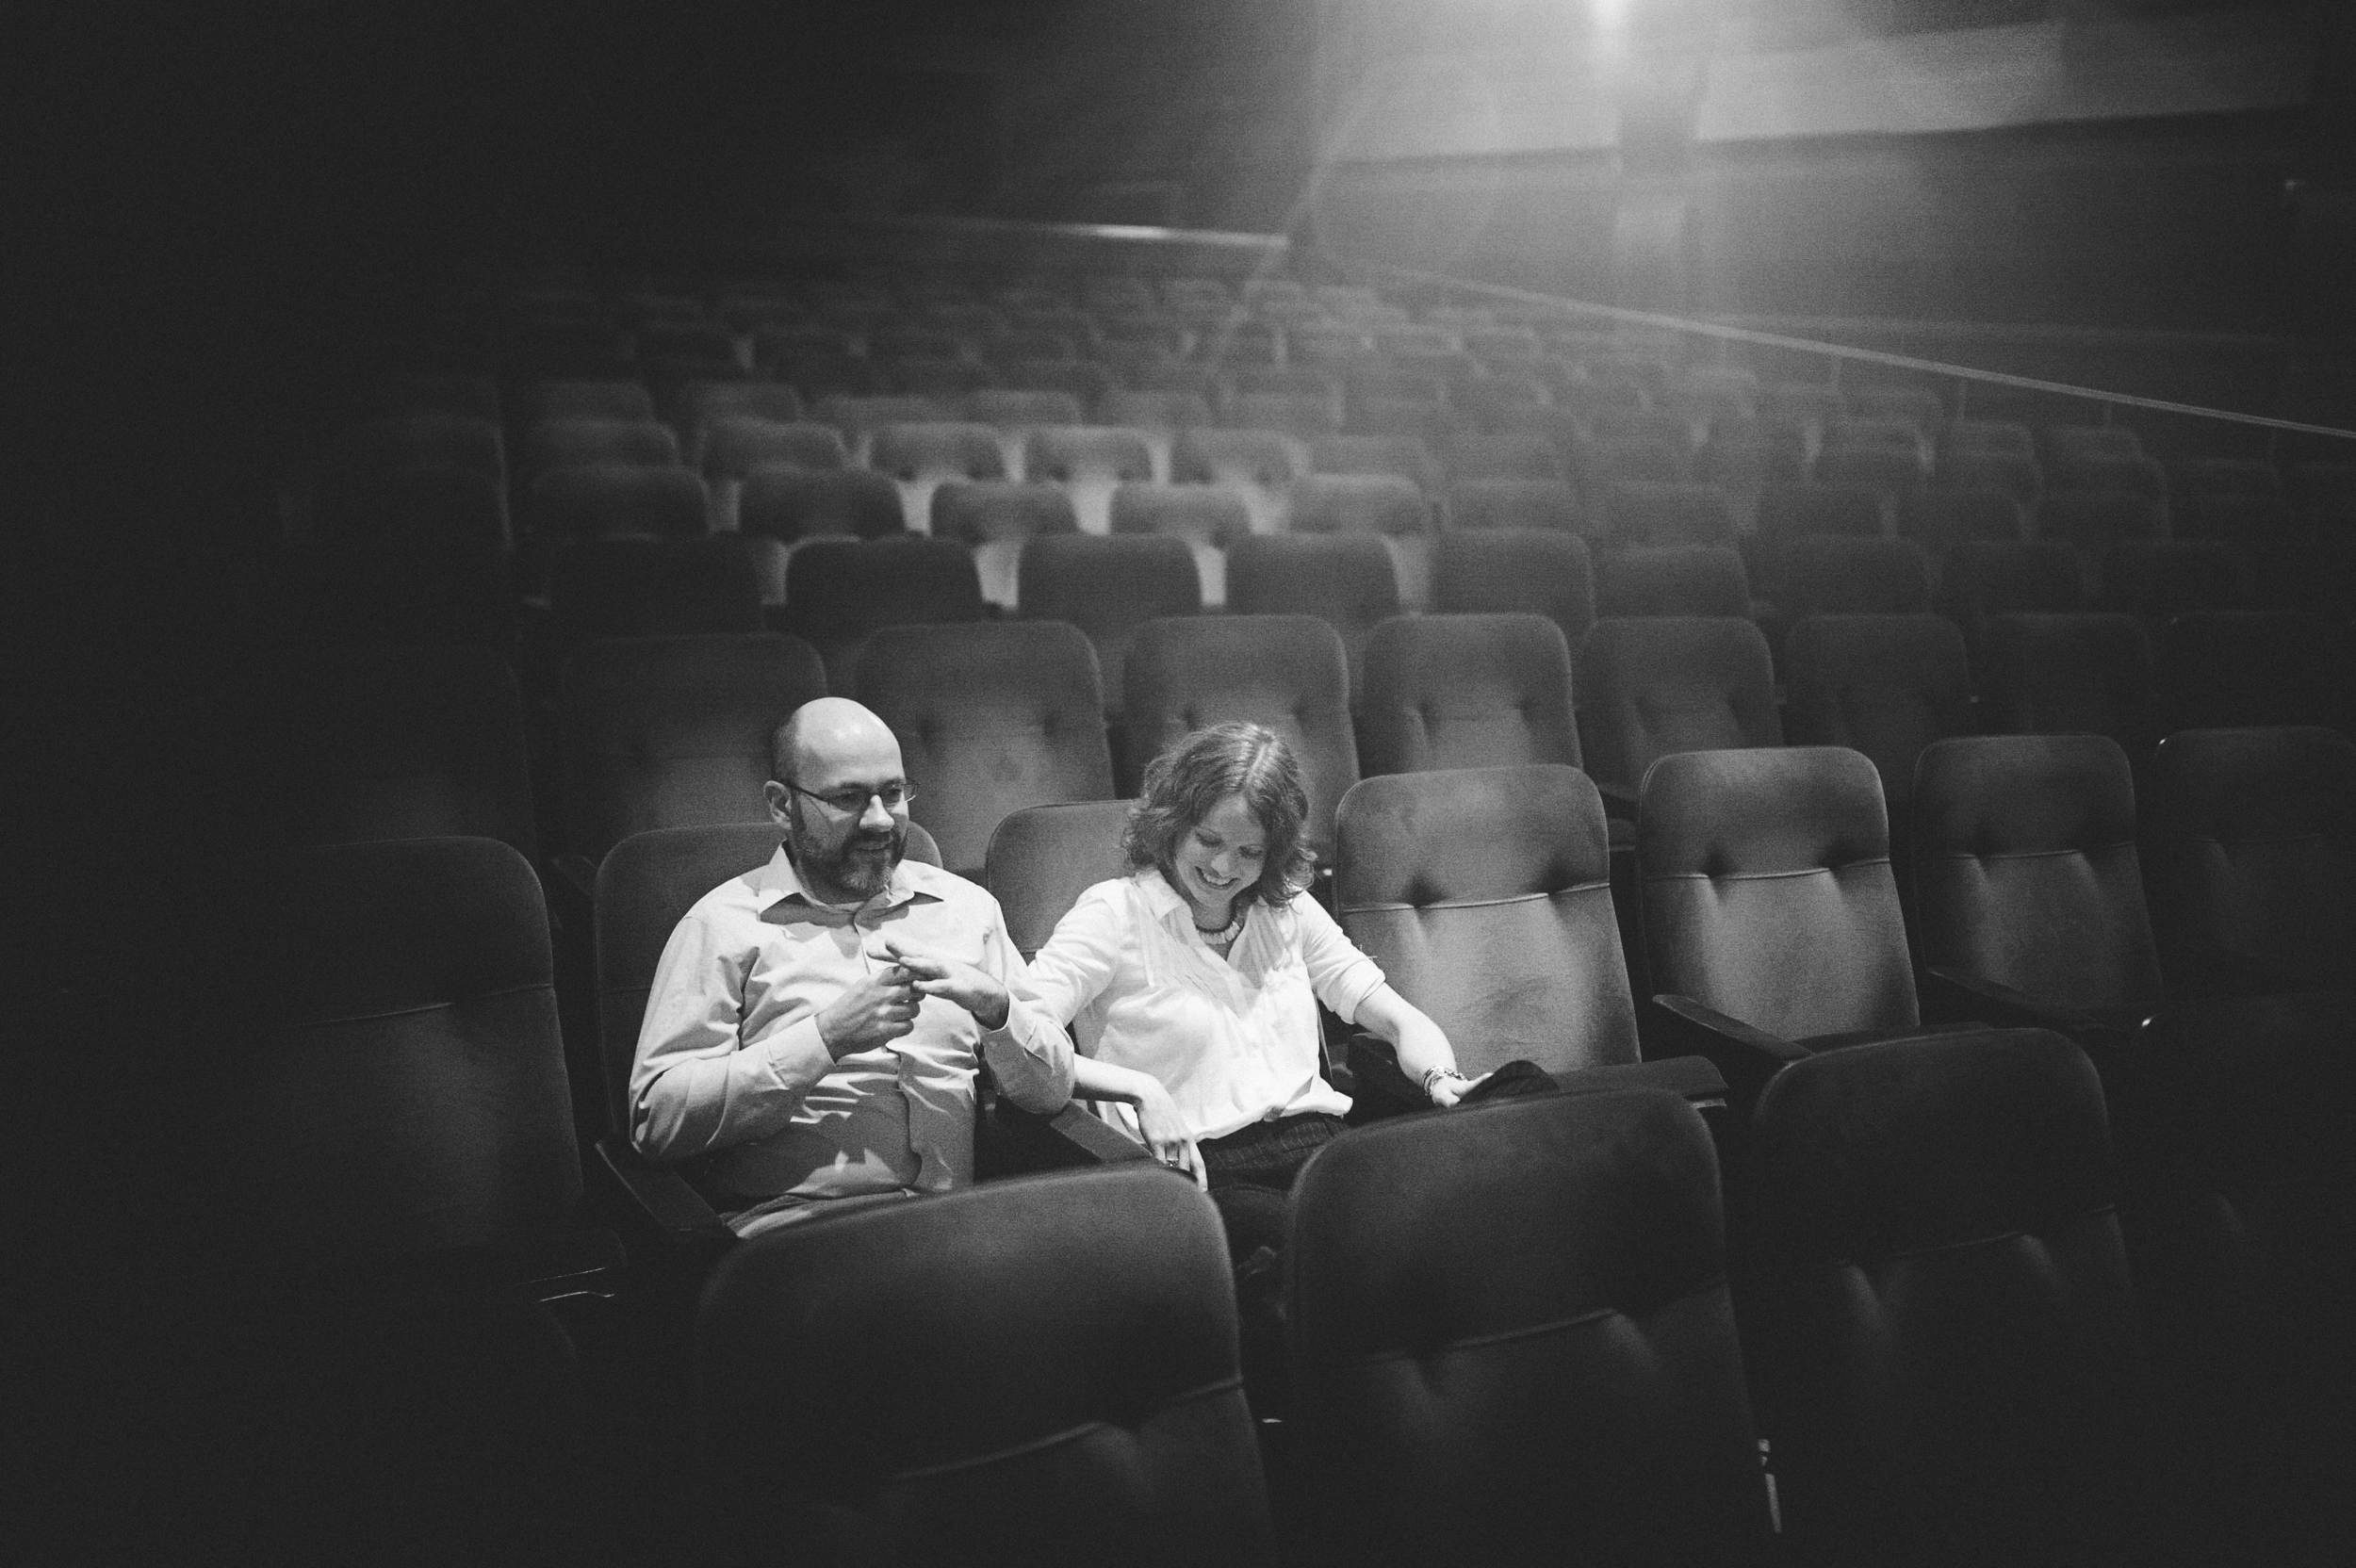 Silver Spring AFI Movie theater Engagement Session Photographer Mantas Kubilinskas-3.jpg